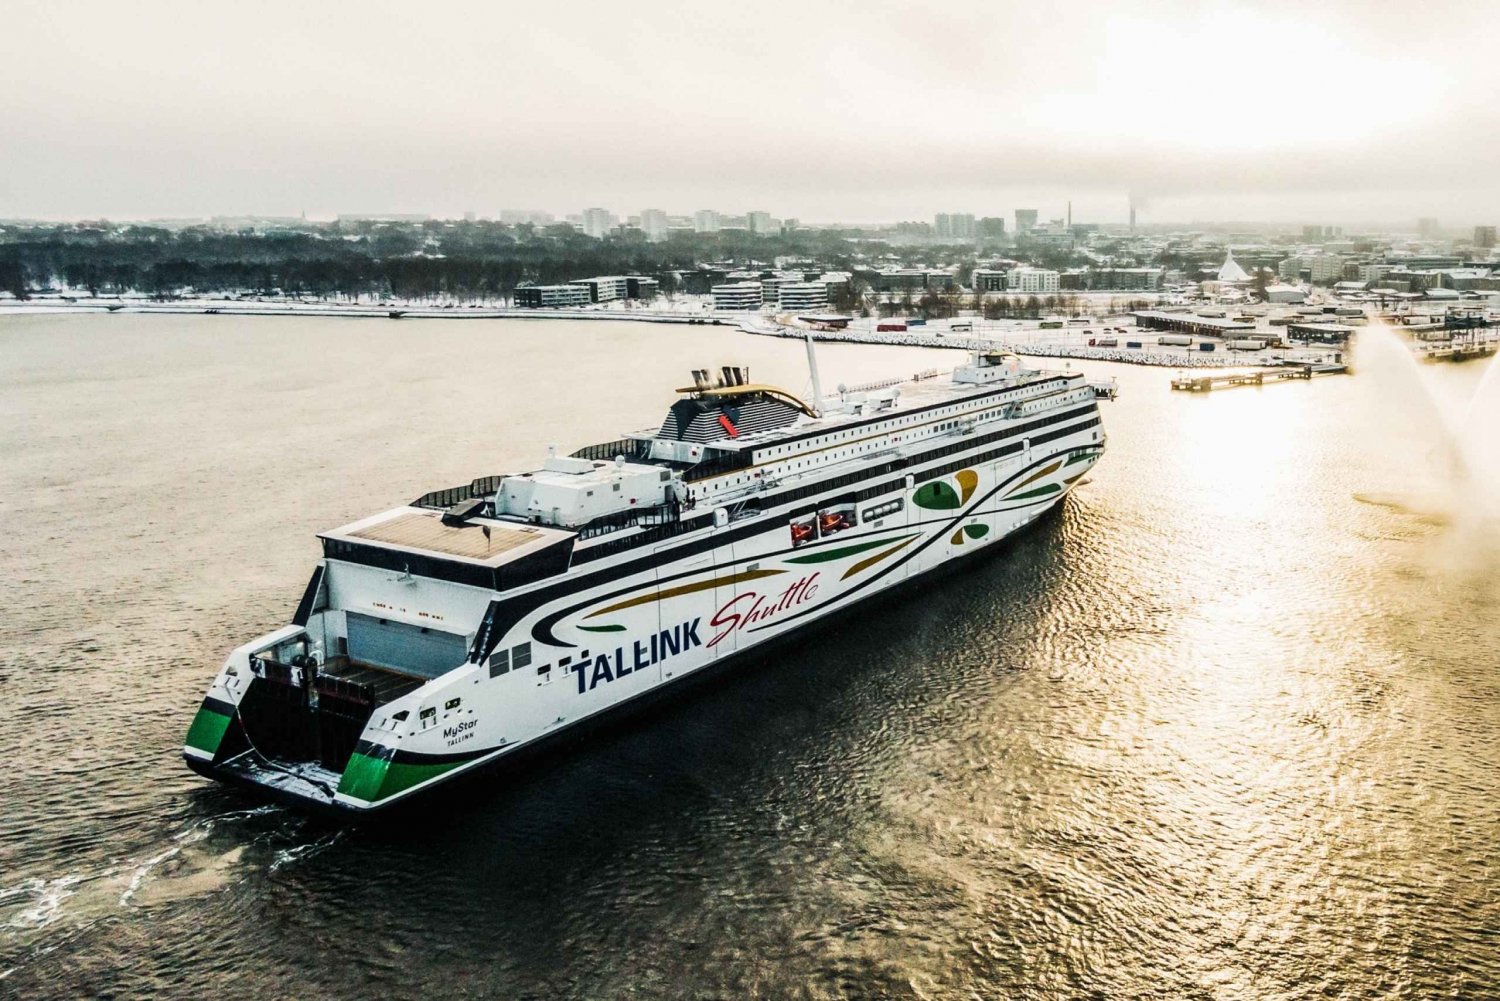 Depuis Helsinki : billet aller-retour en ferry pour Tallinn